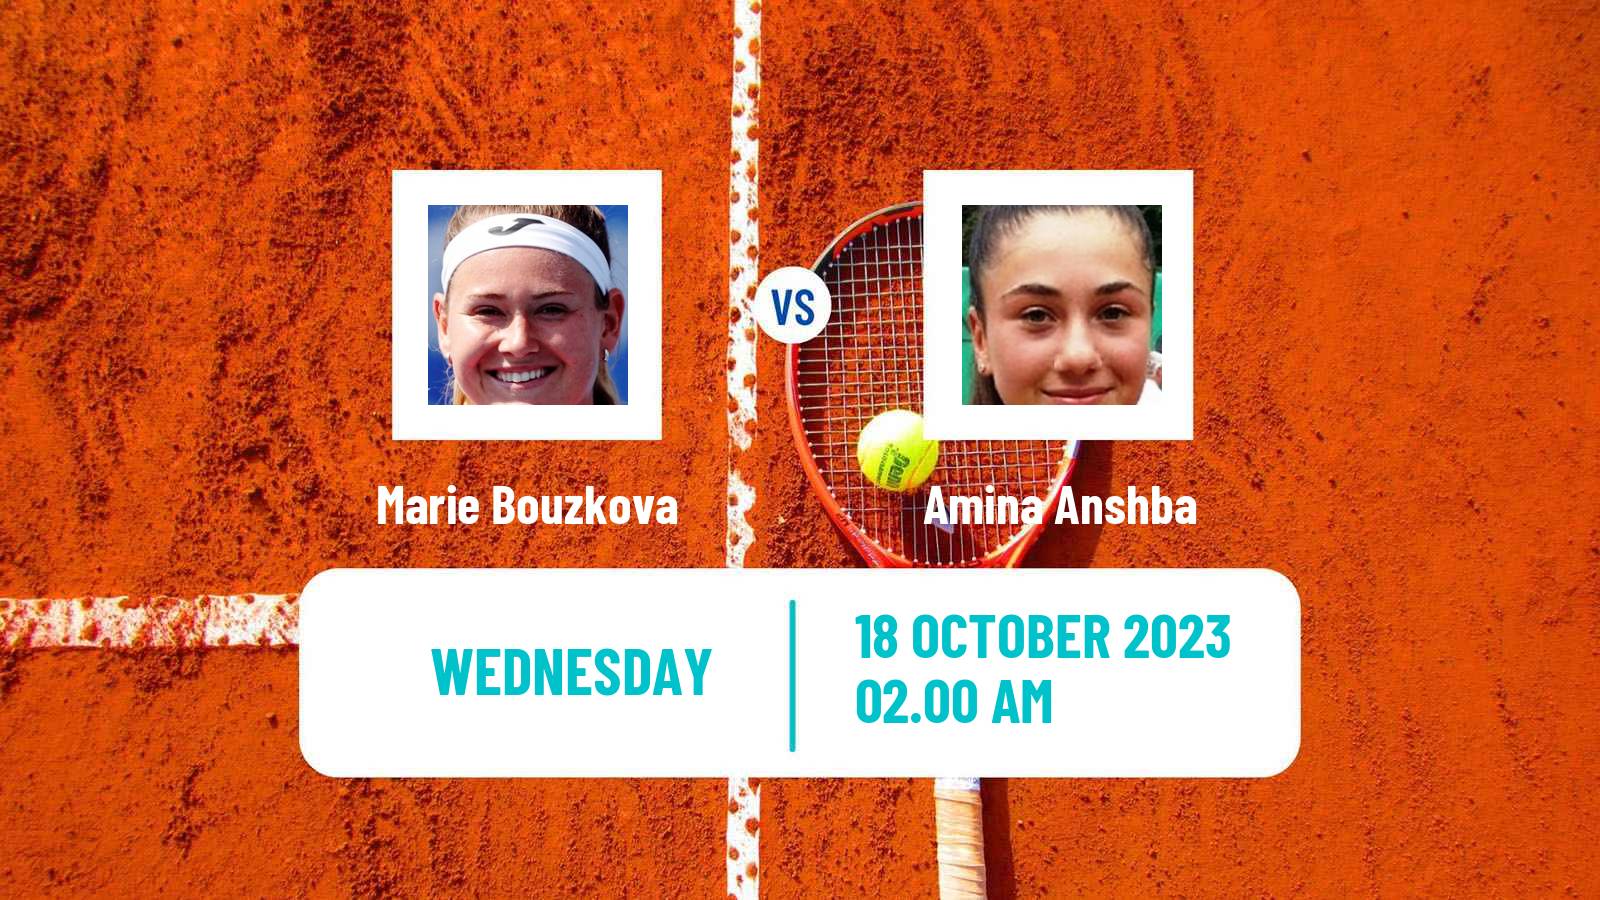 Tennis WTA Nanchang Marie Bouzkova - Amina Anshba